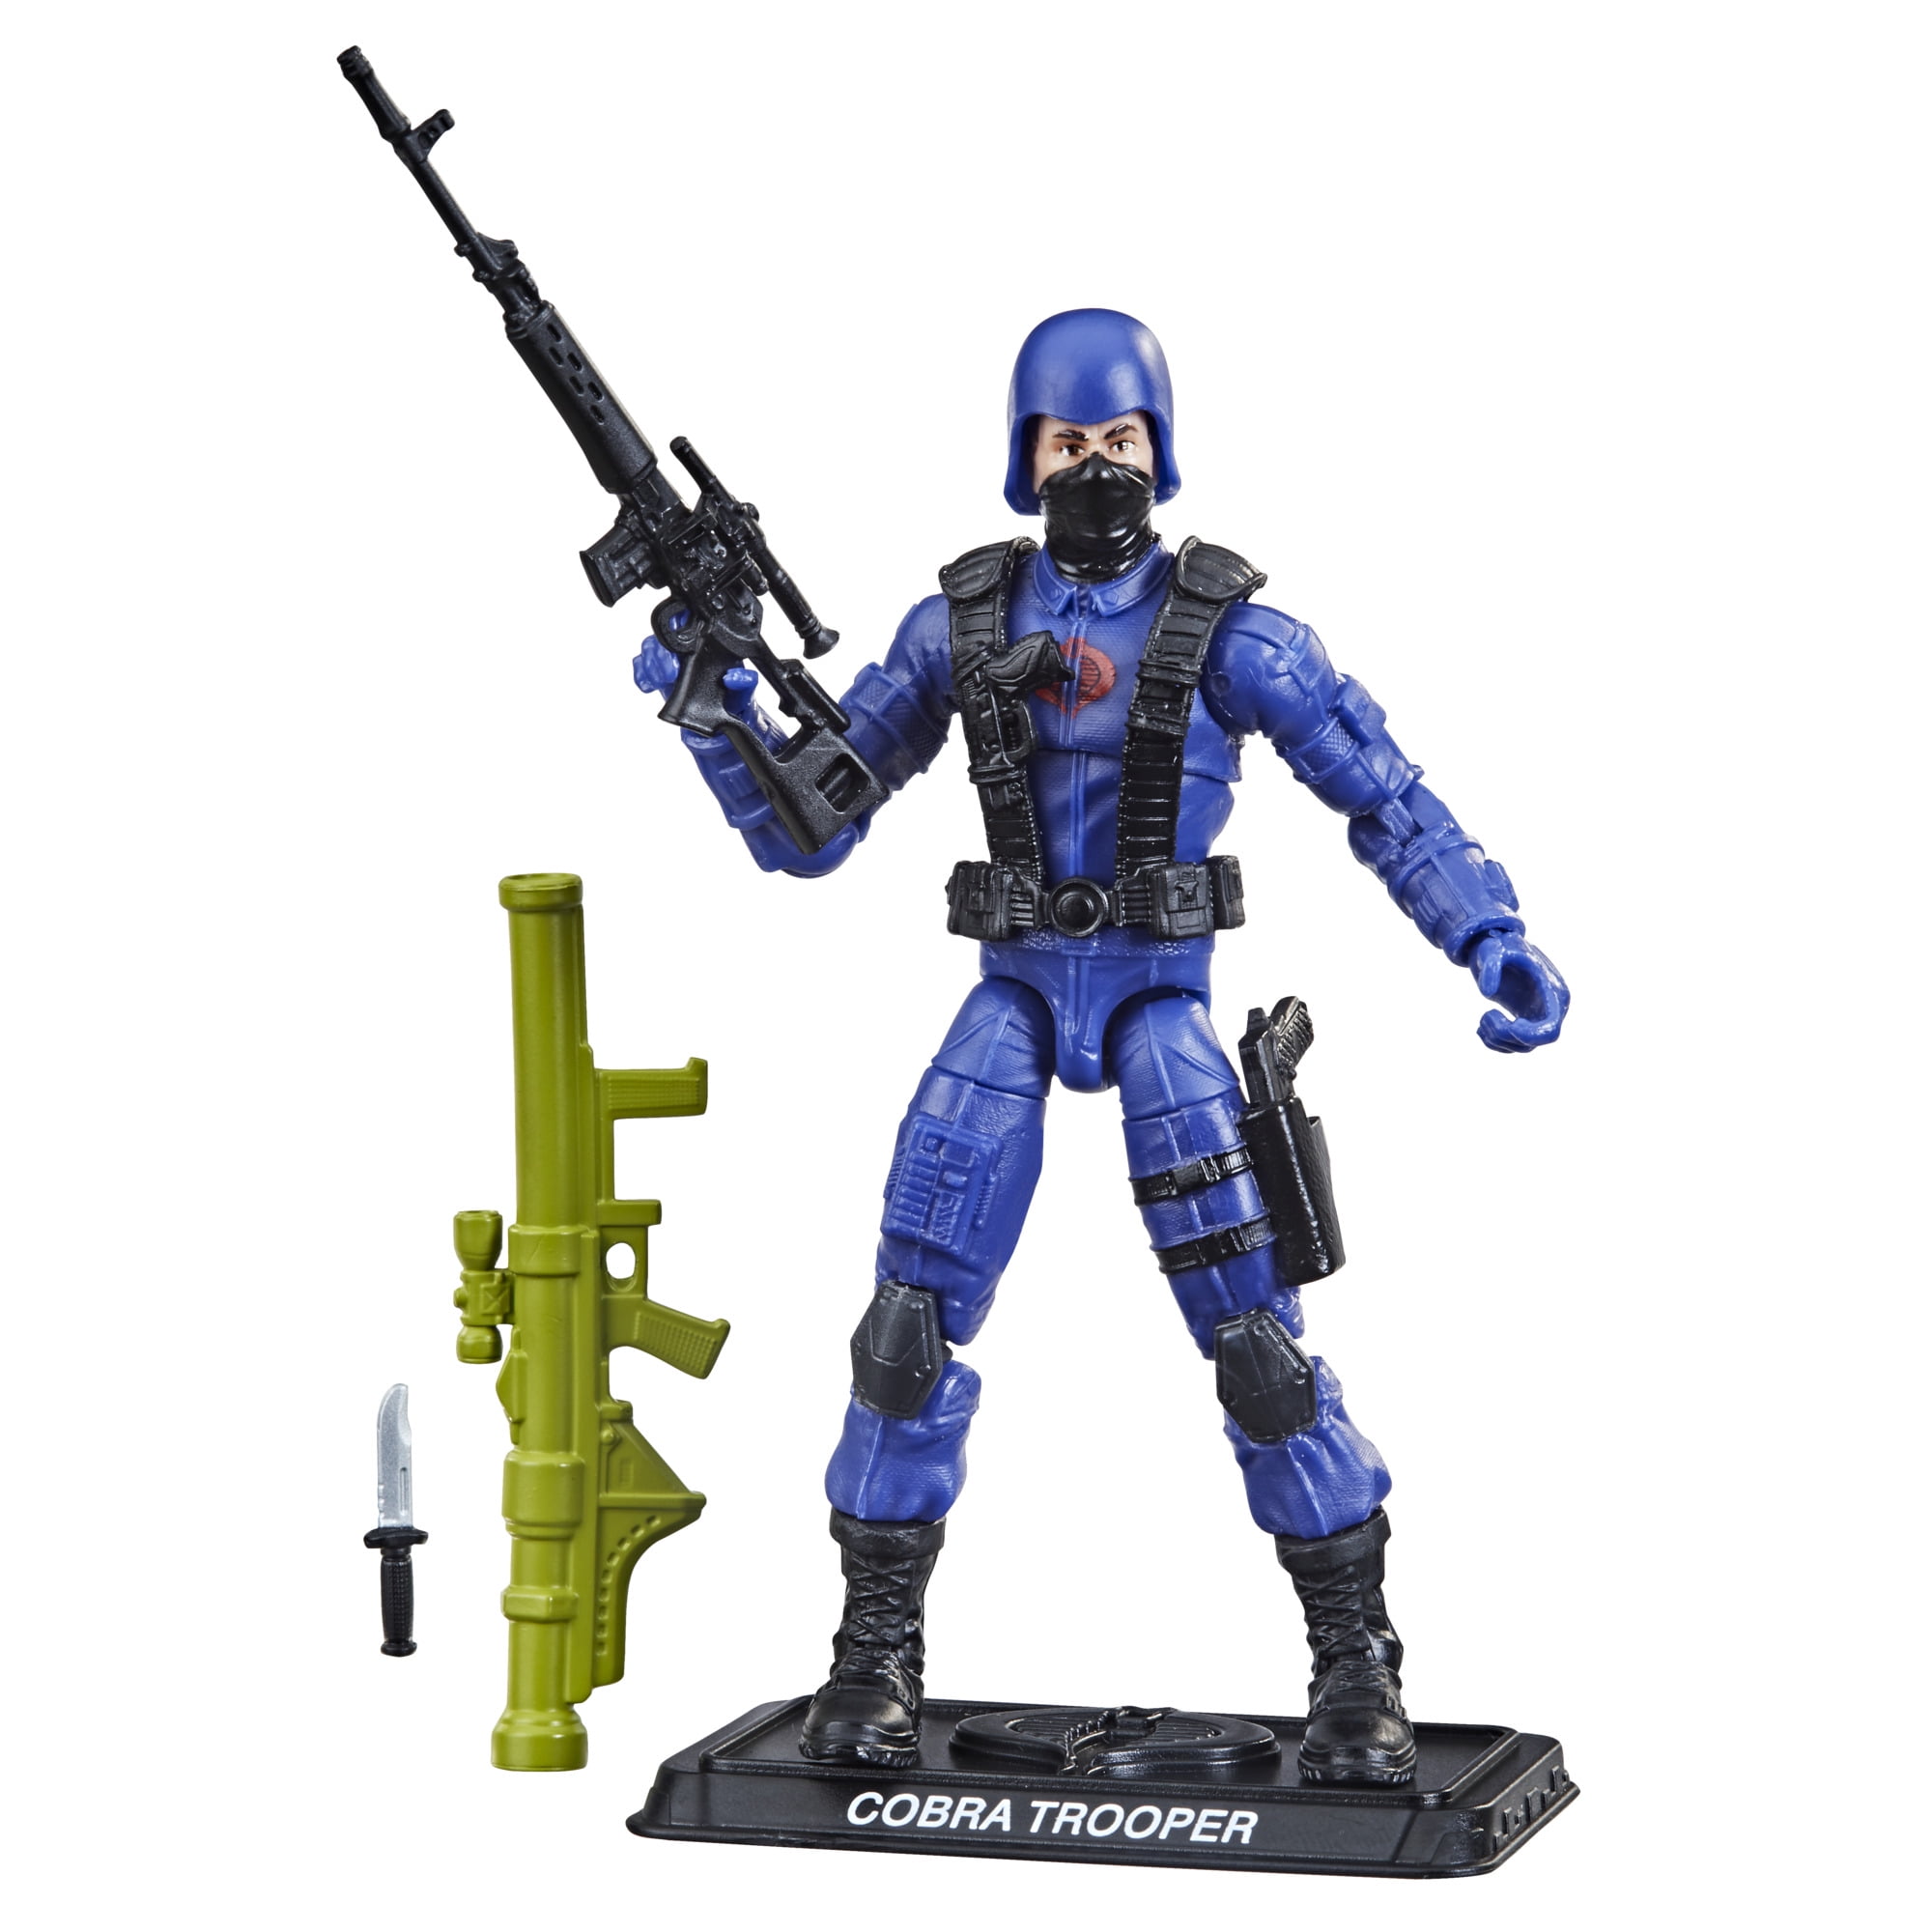 Joe 25th Anniversary Cobra Bazooka Trooper Action Figure for sale online Hasbro G.I 